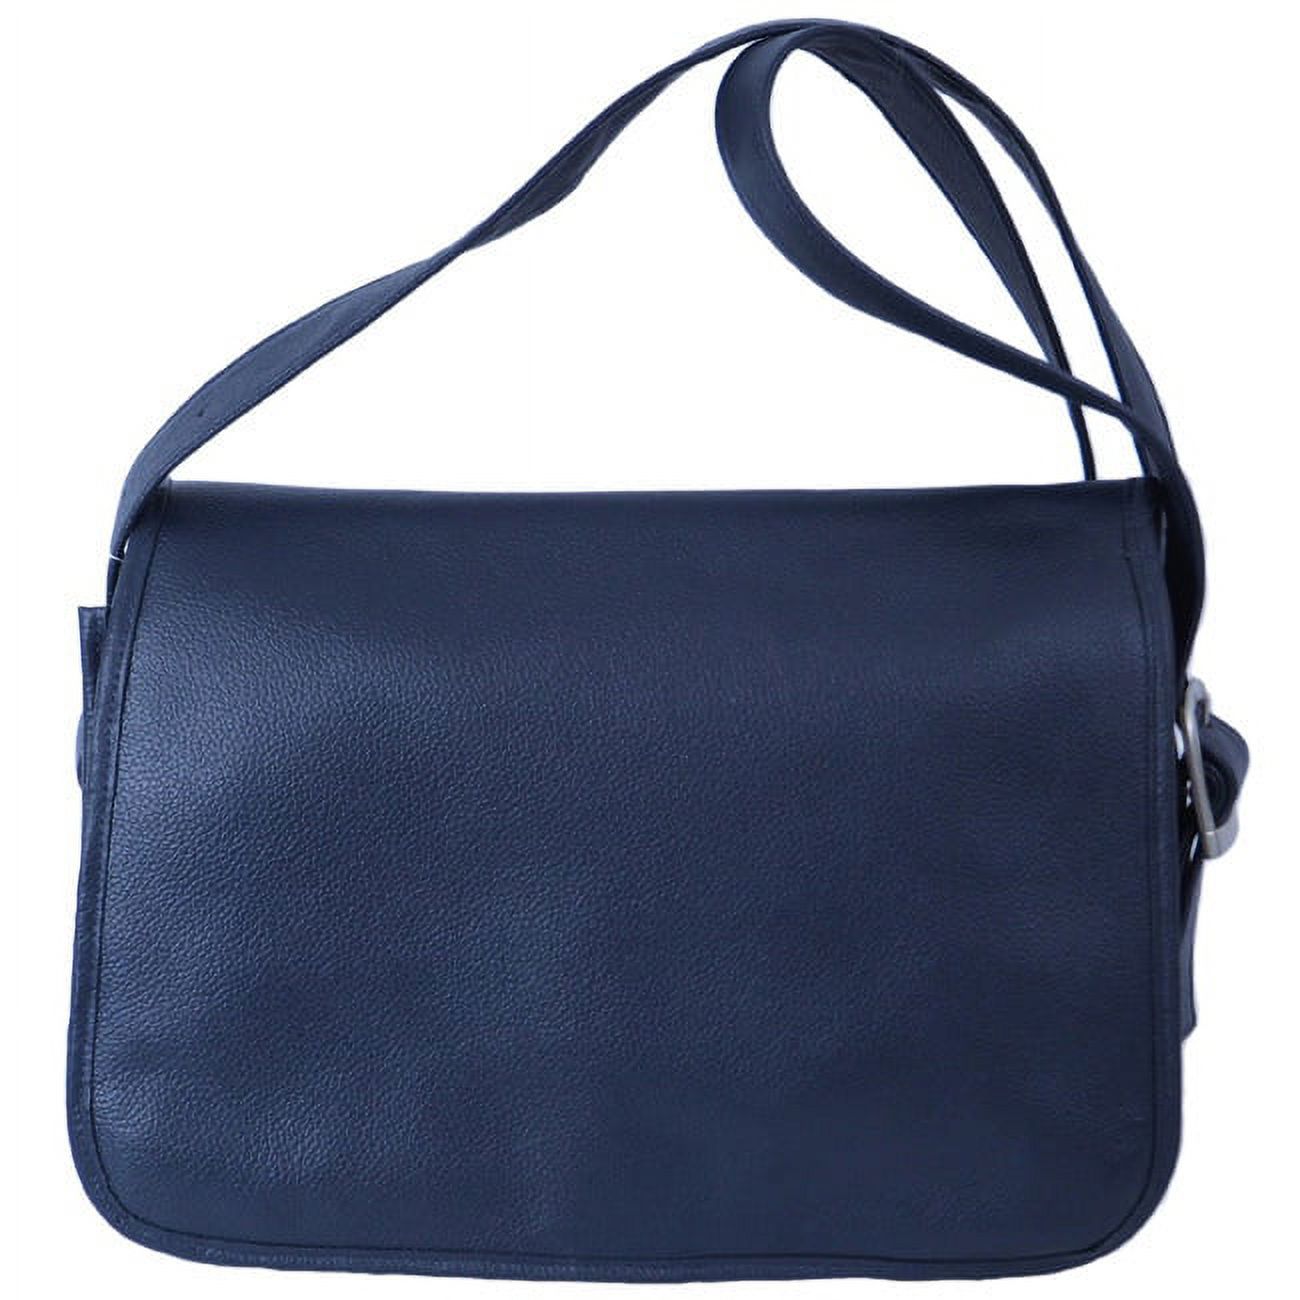 Flap-Over Leather Handbag - image 3 of 3